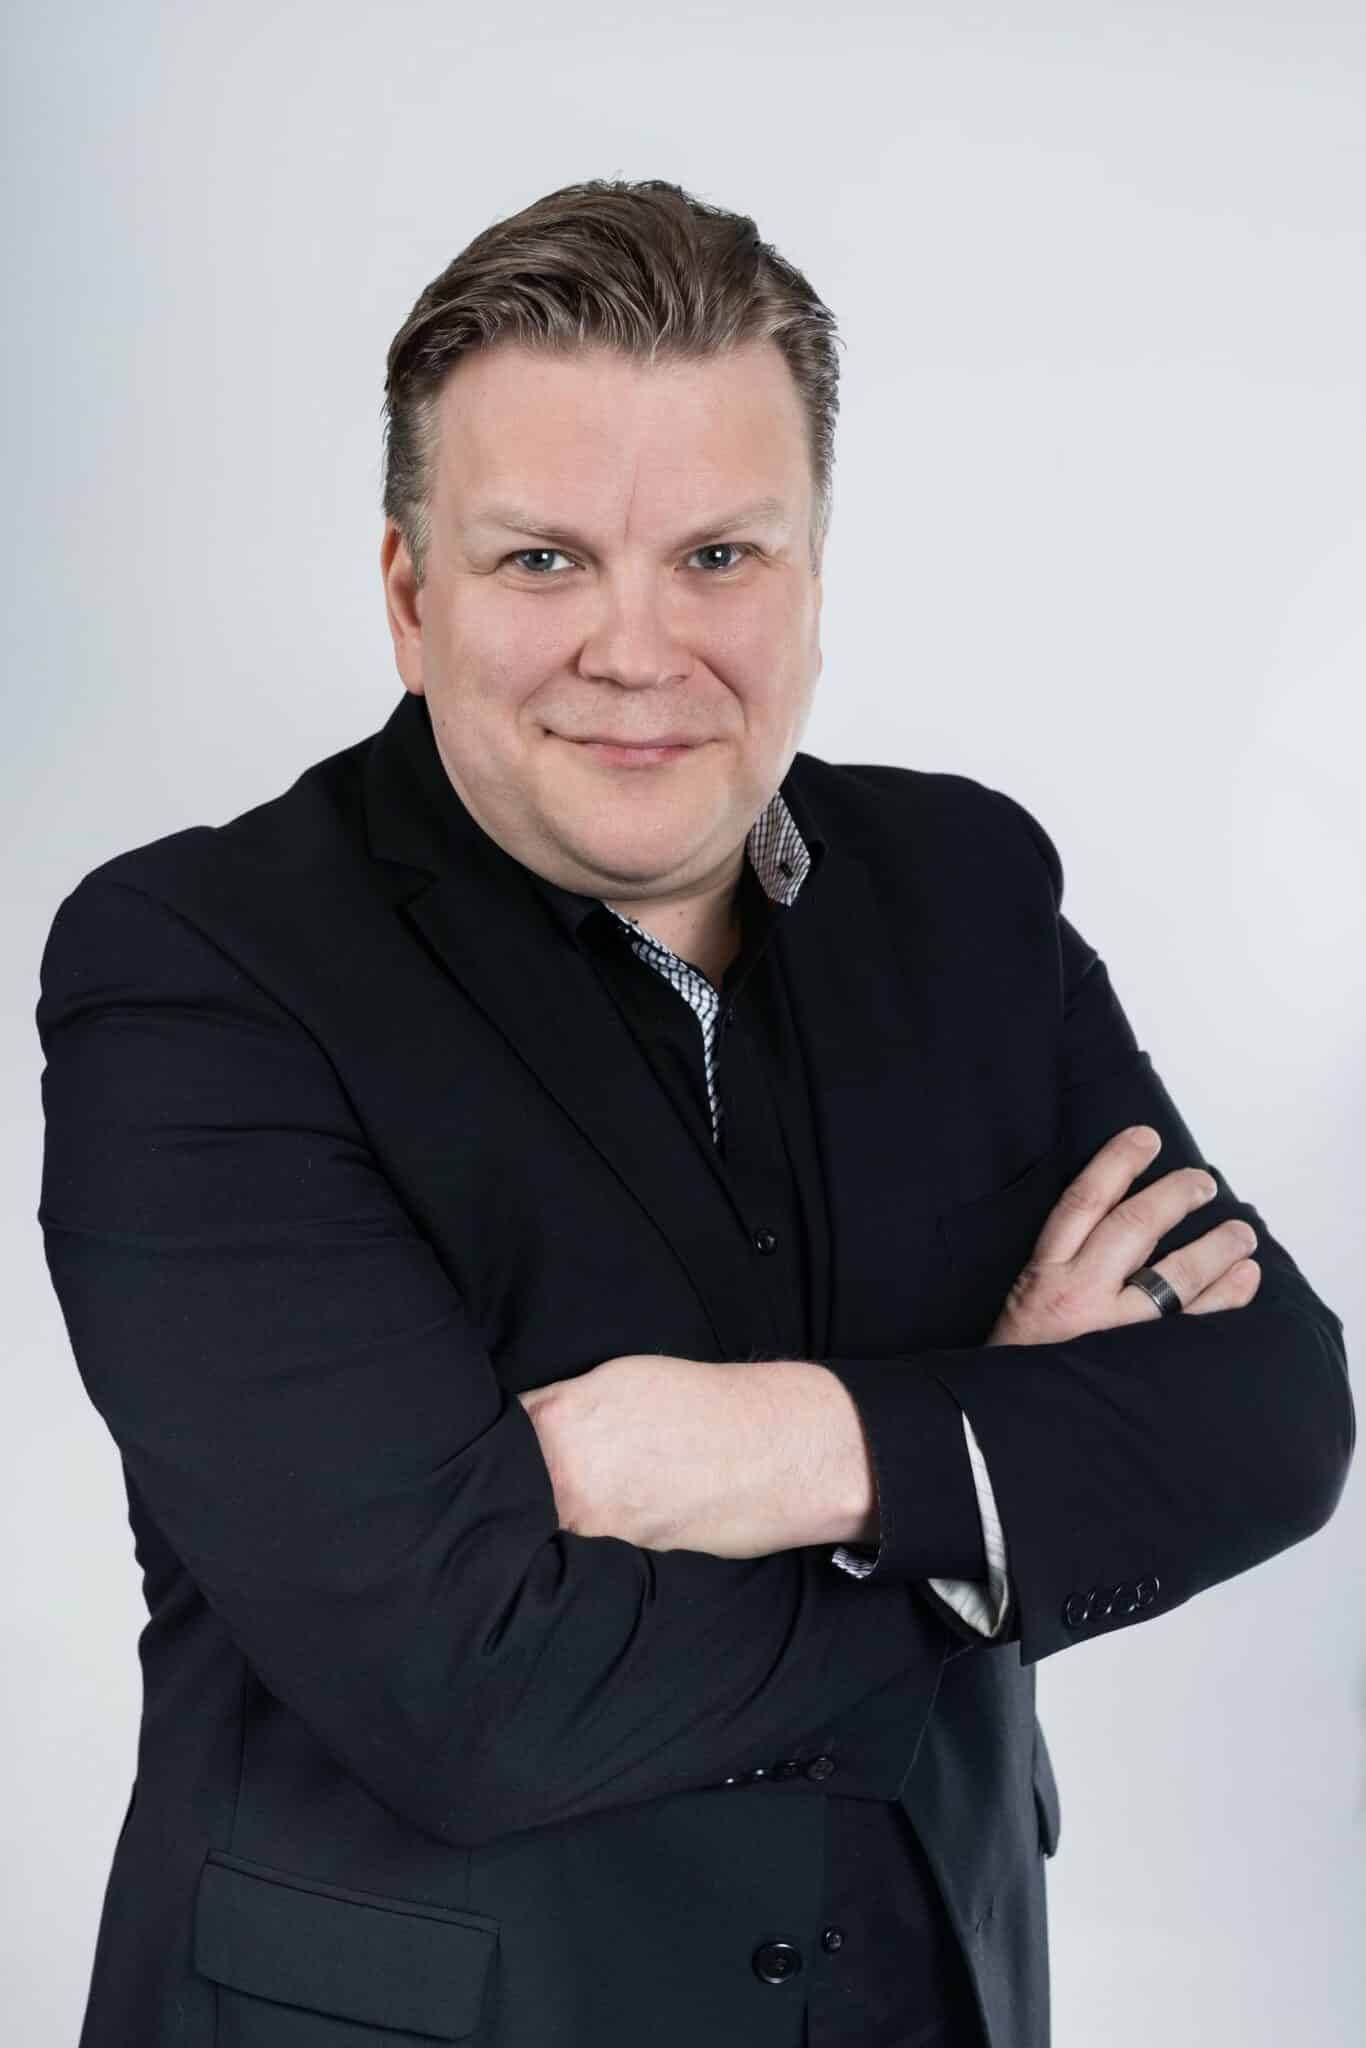 Ville Karkkolainen, Chief Business Development Officer at Bladefence